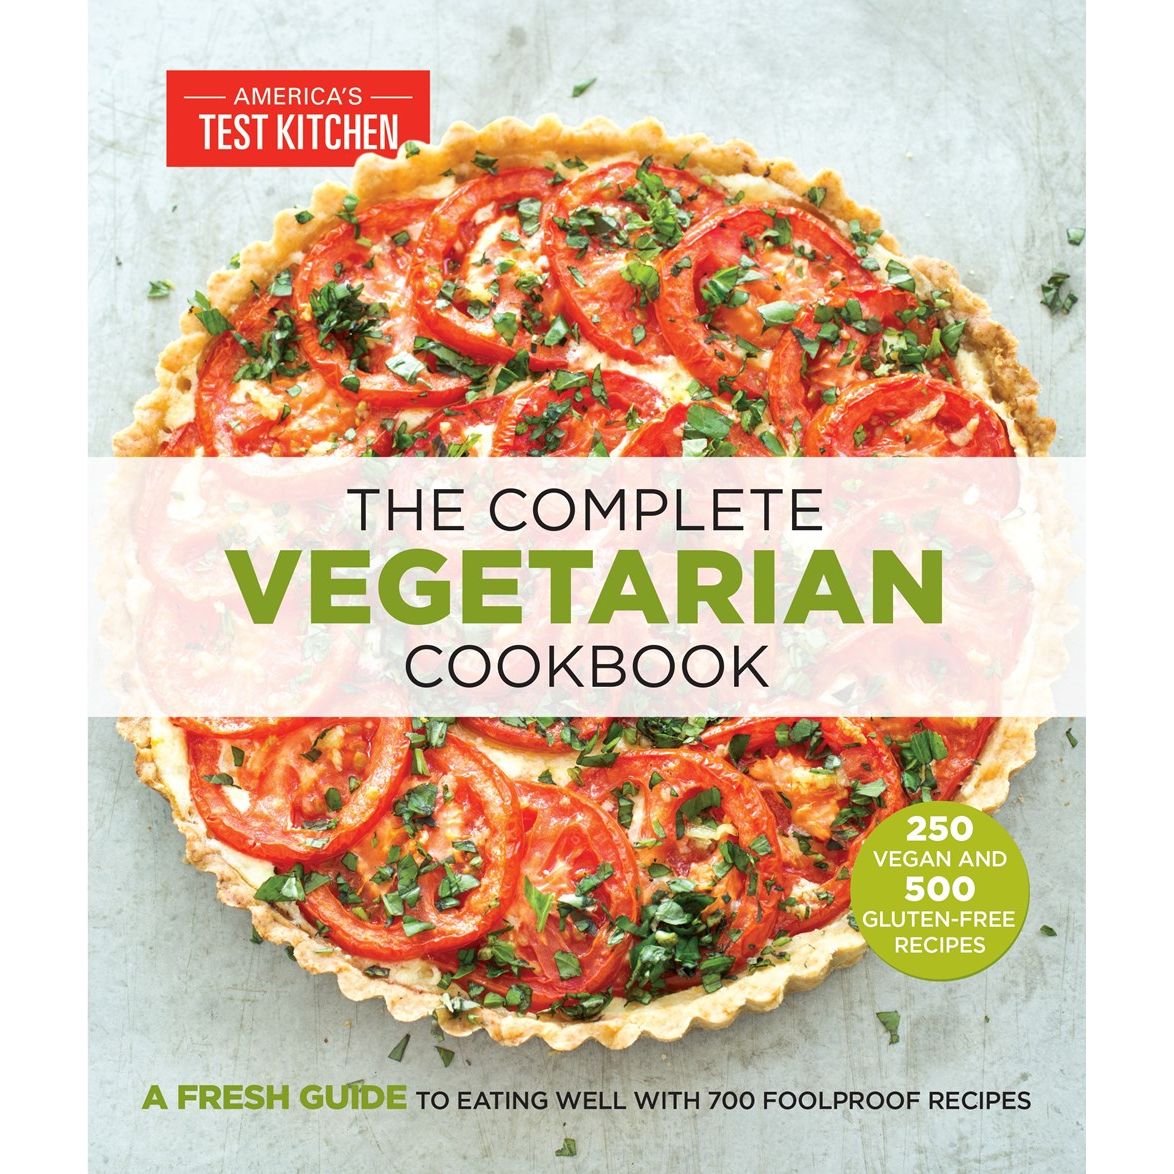 The Complete Vegetarian Cookbook (America's Test Kitchen)